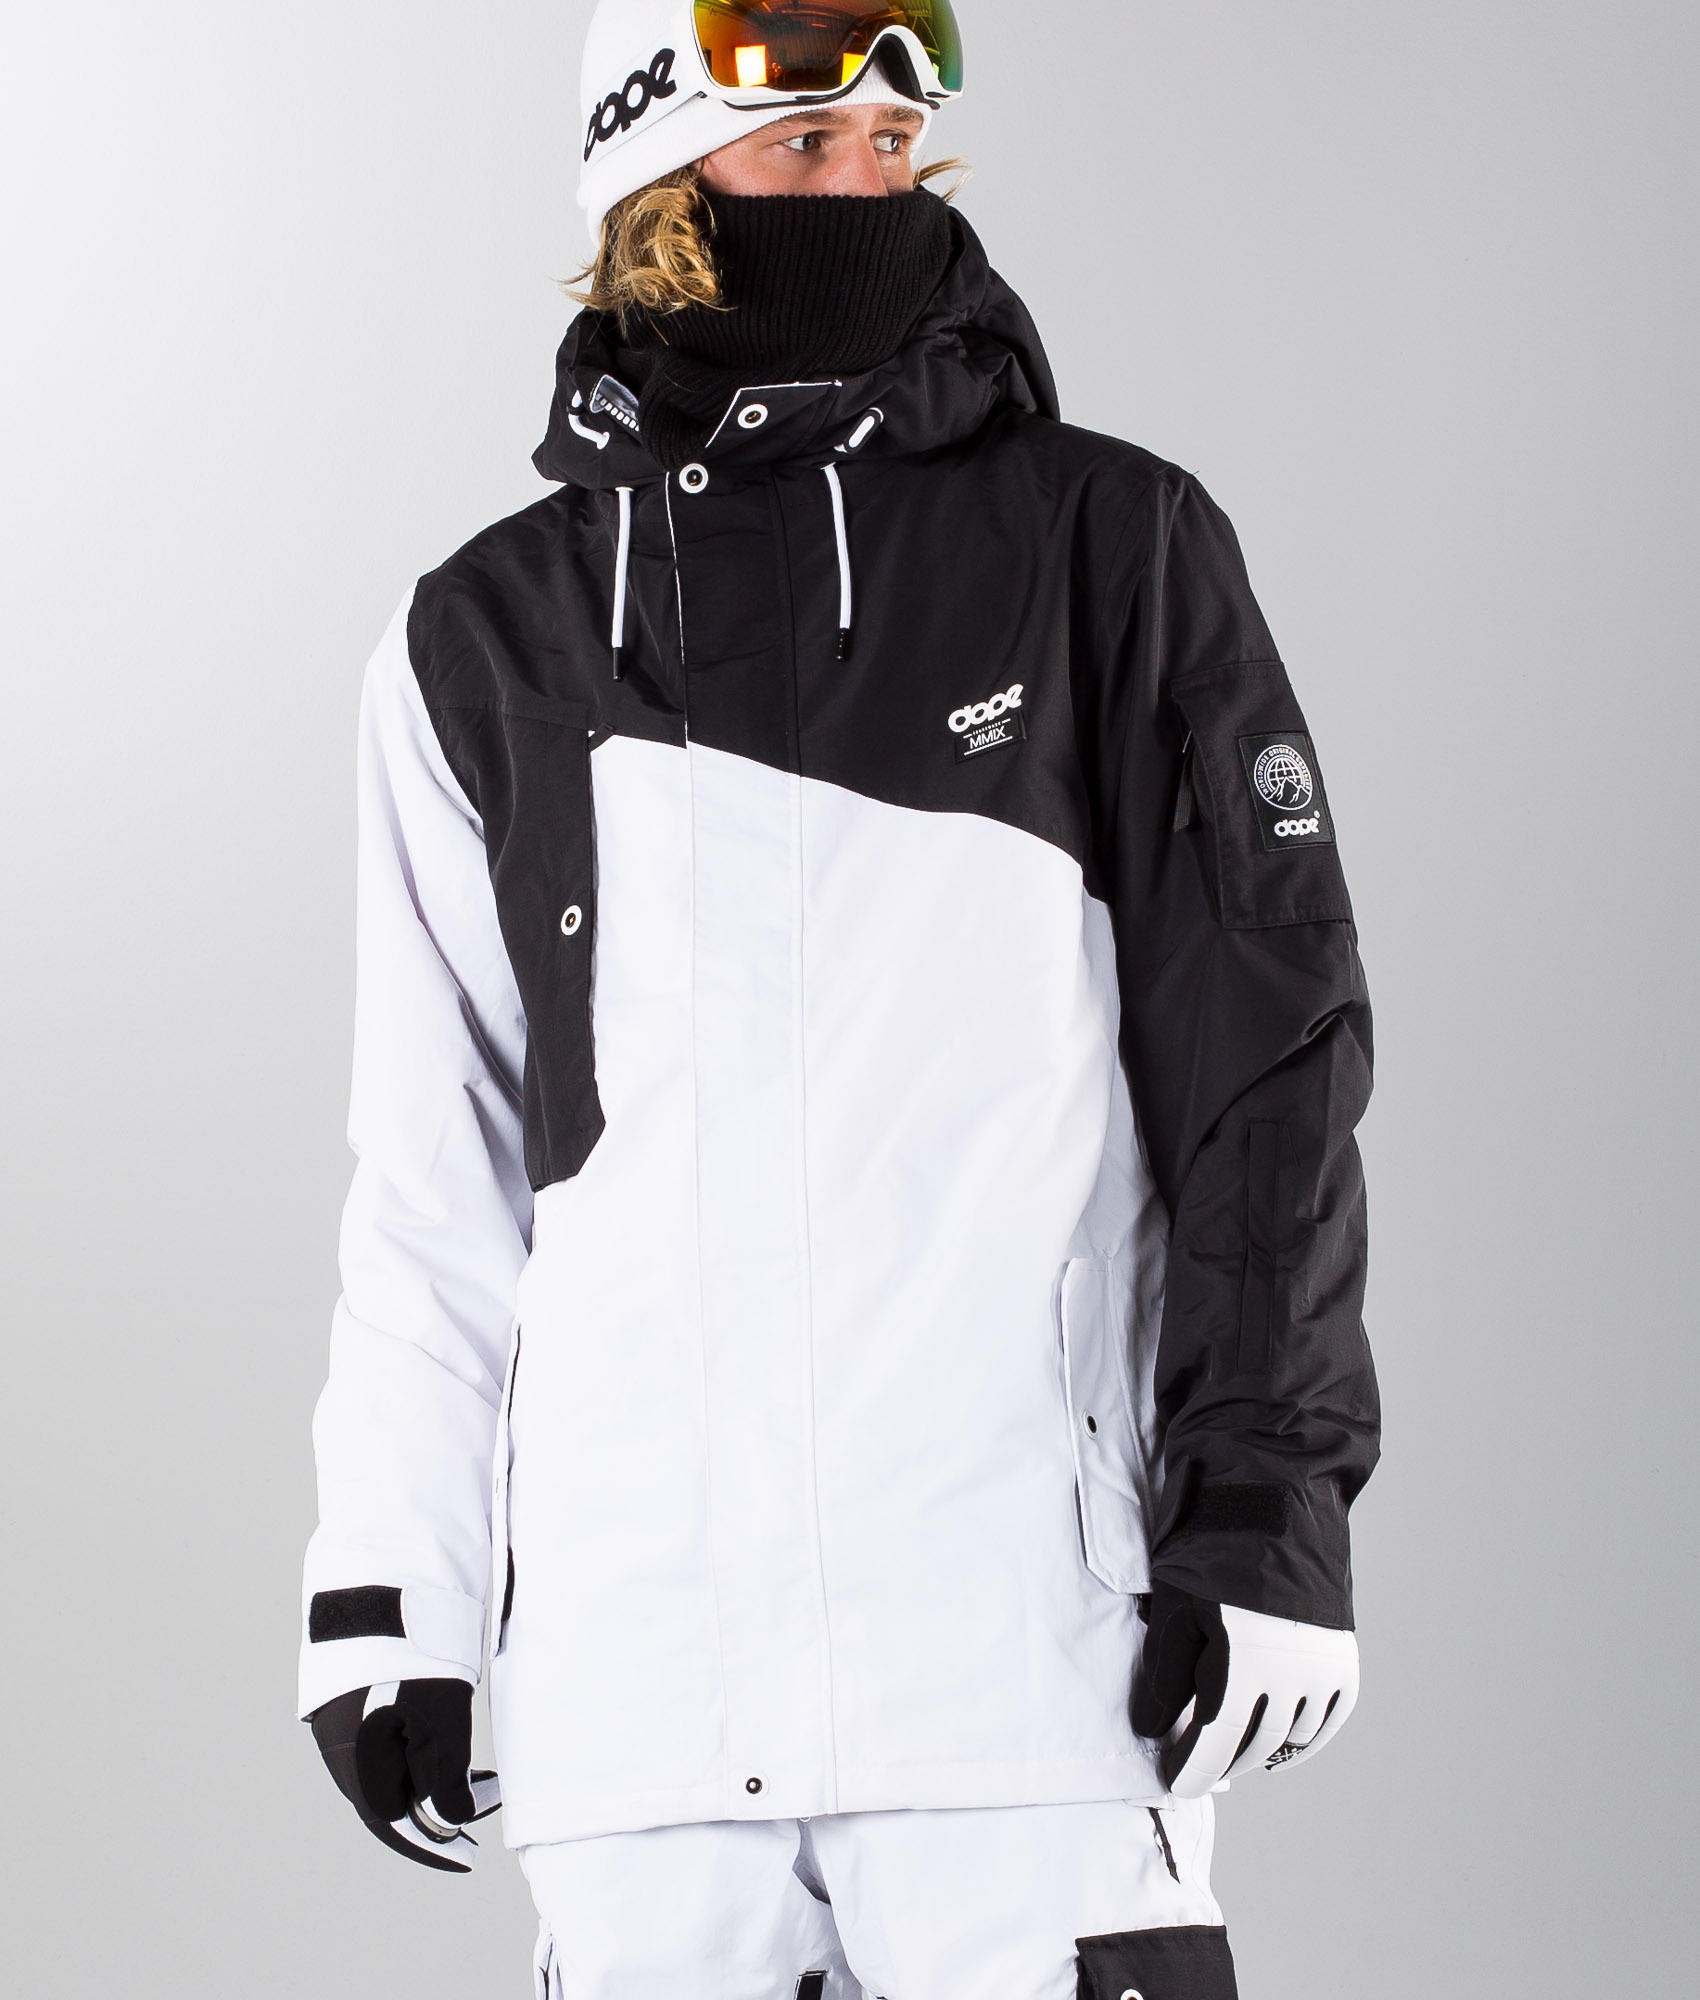 Black And White Ski Jacket